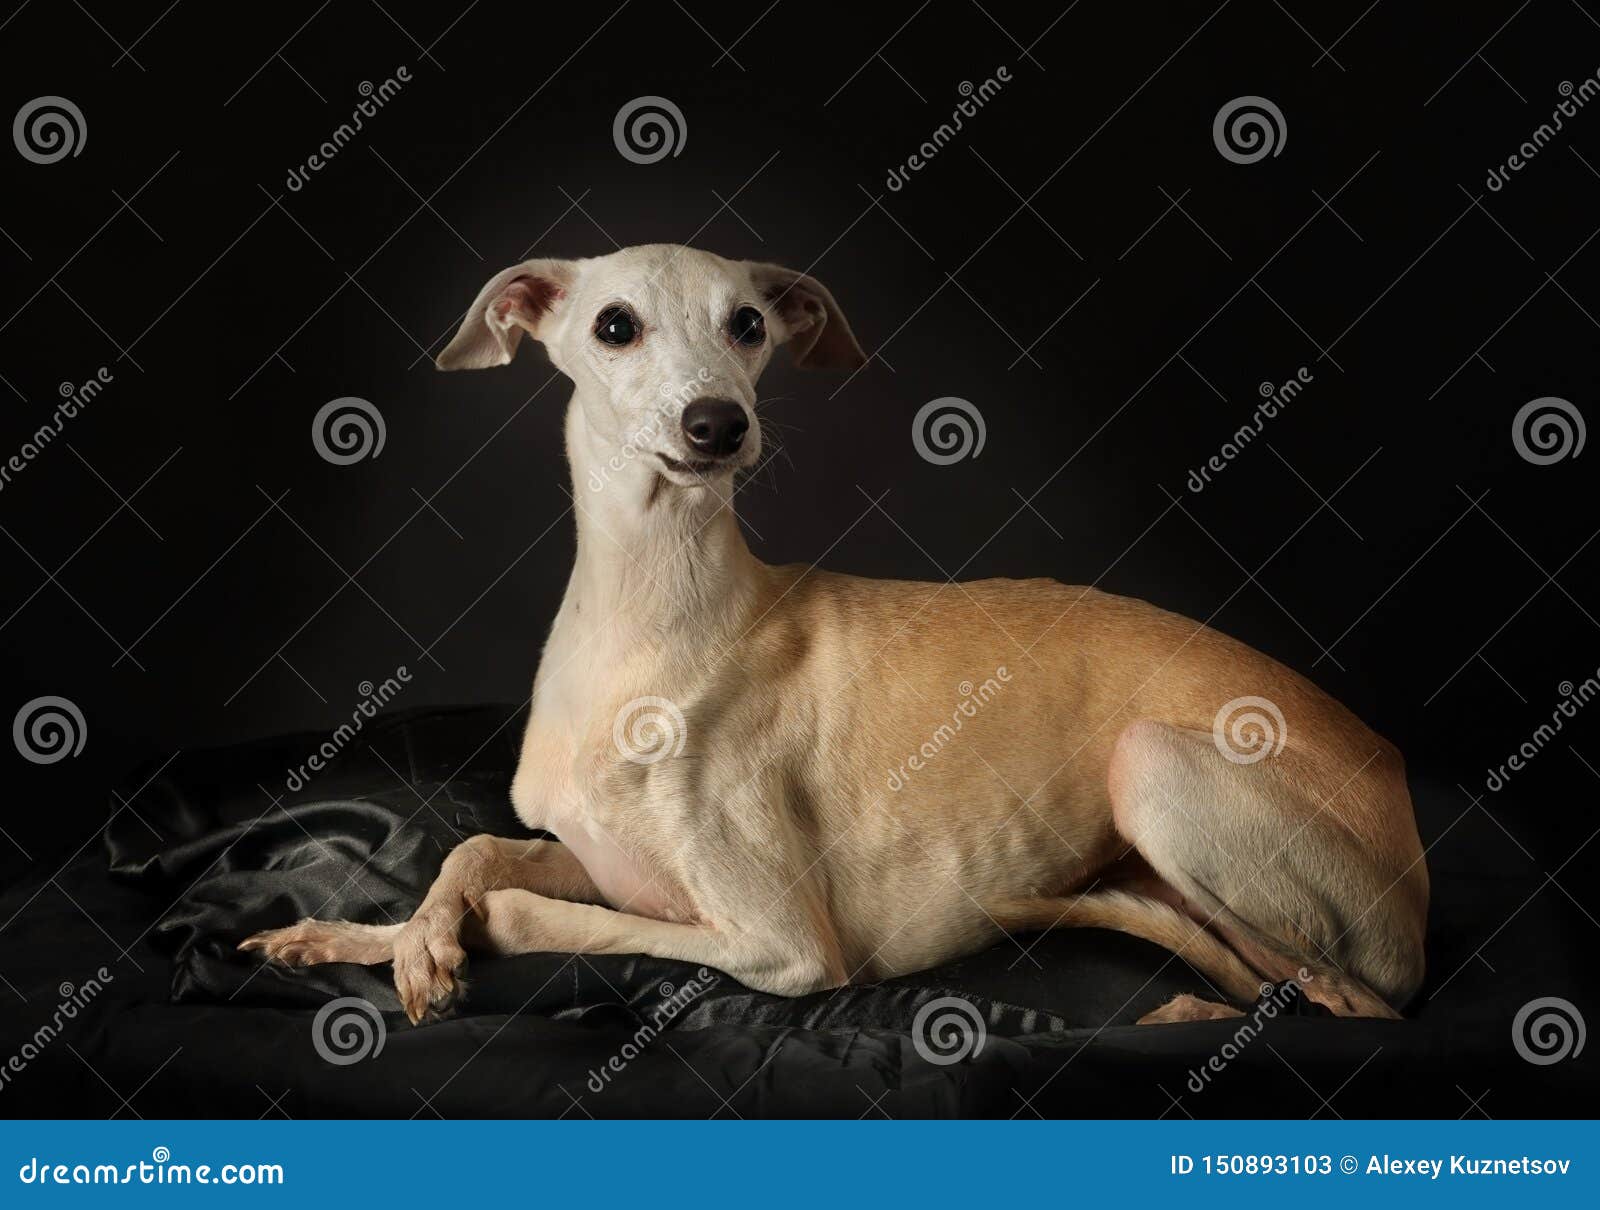 italian greyhound dog over black